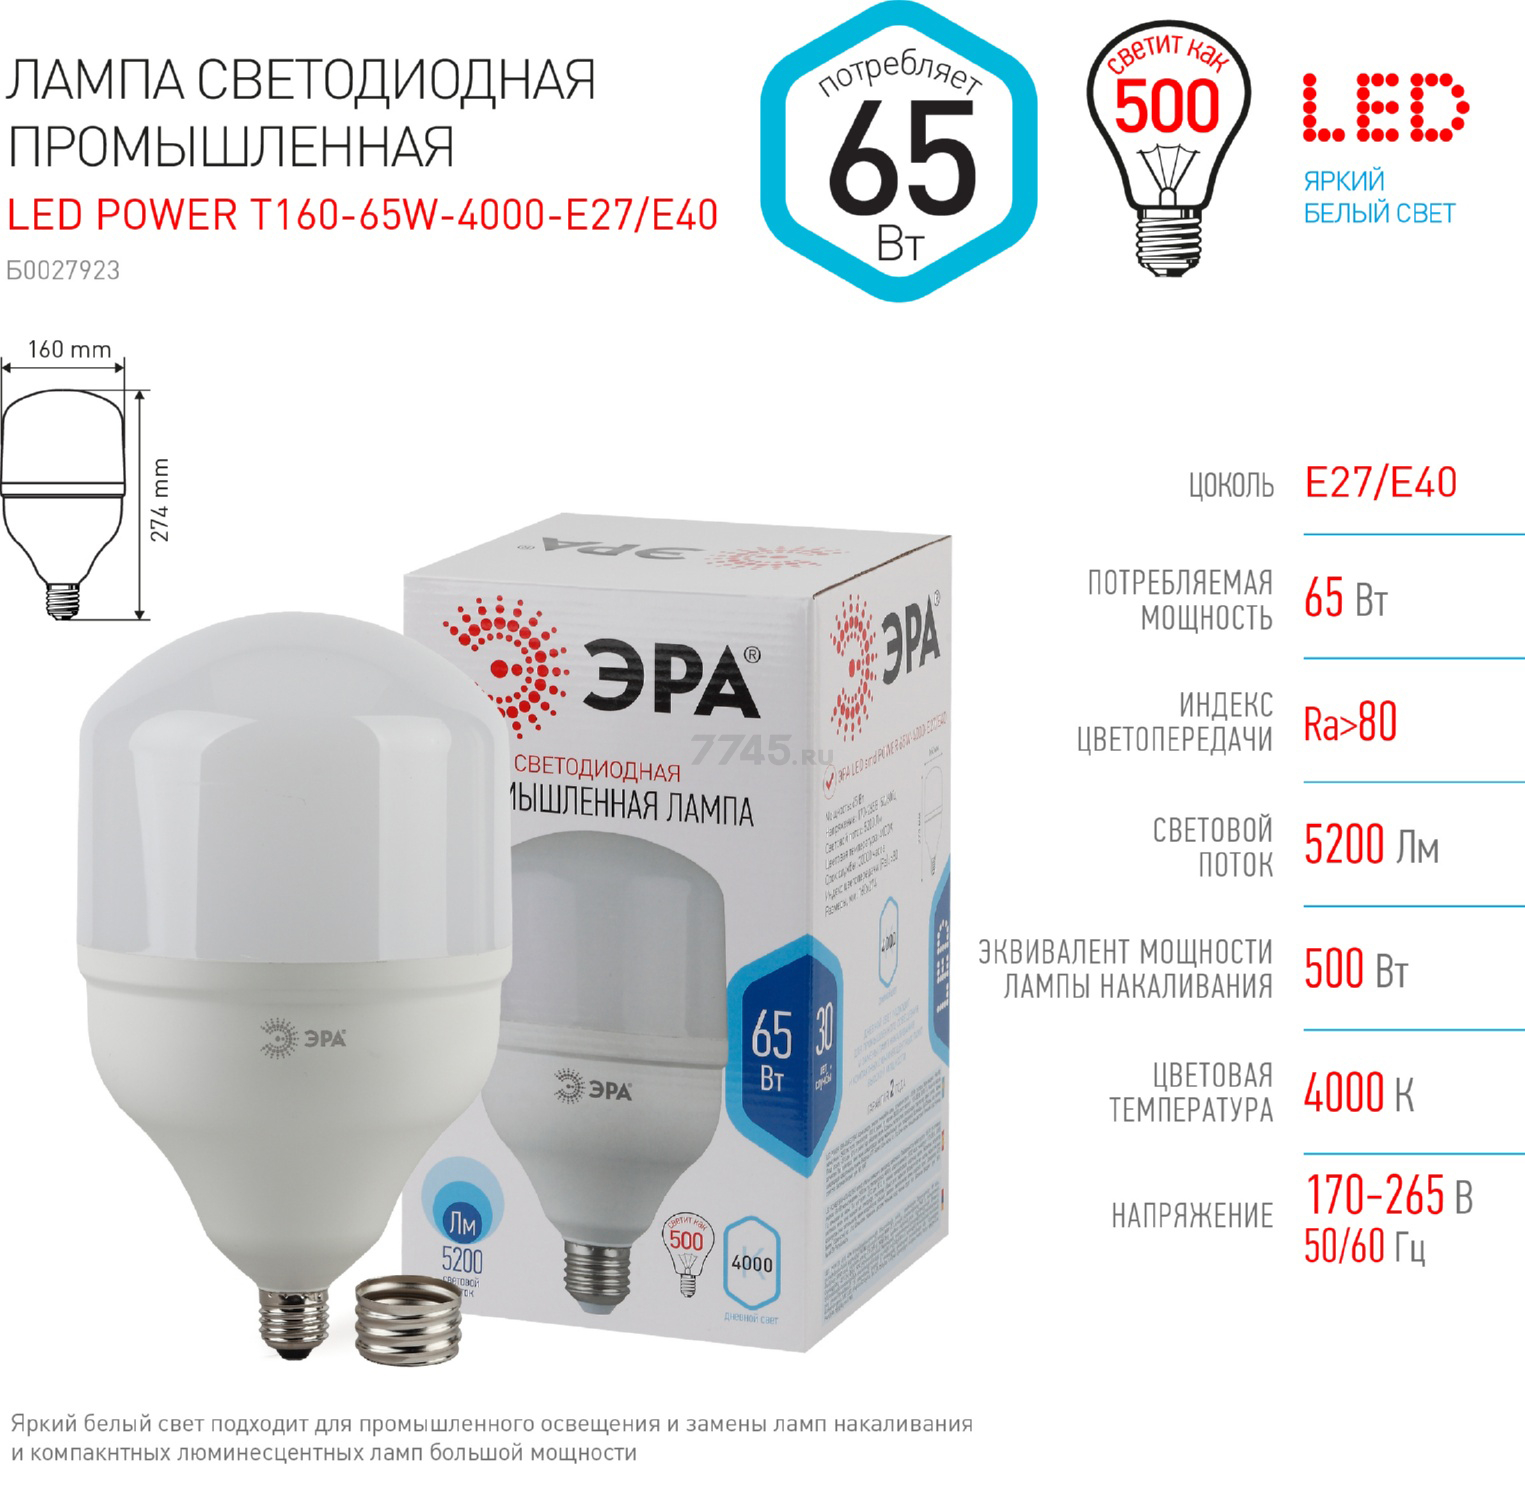 Лампа светодиодная промышленная E27/E40 ЭРА STD LED Power T160 65 Вт 4000 К - Фото 4